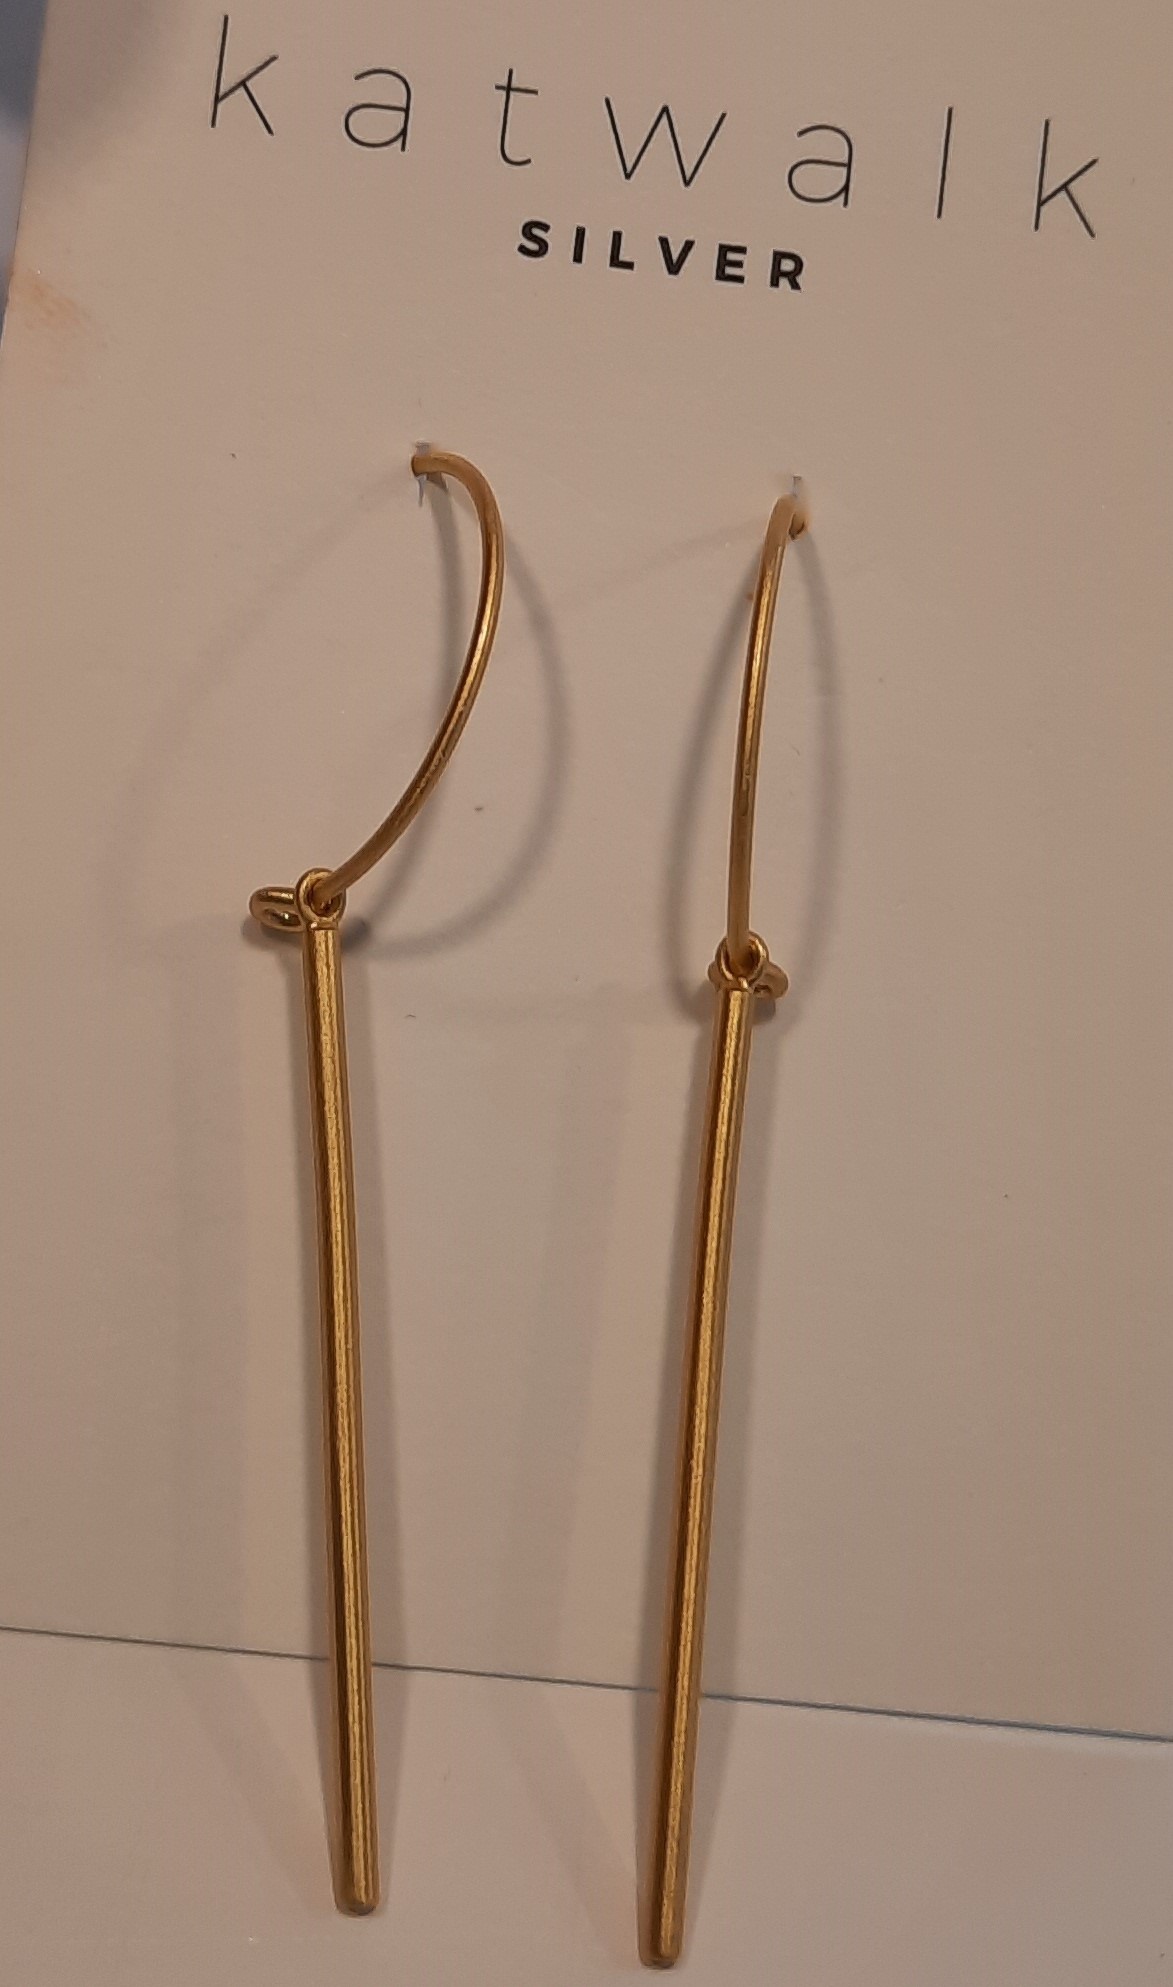 Katwalk Silver KWS earring gold - hoop -hanging bar (SEMG31862)